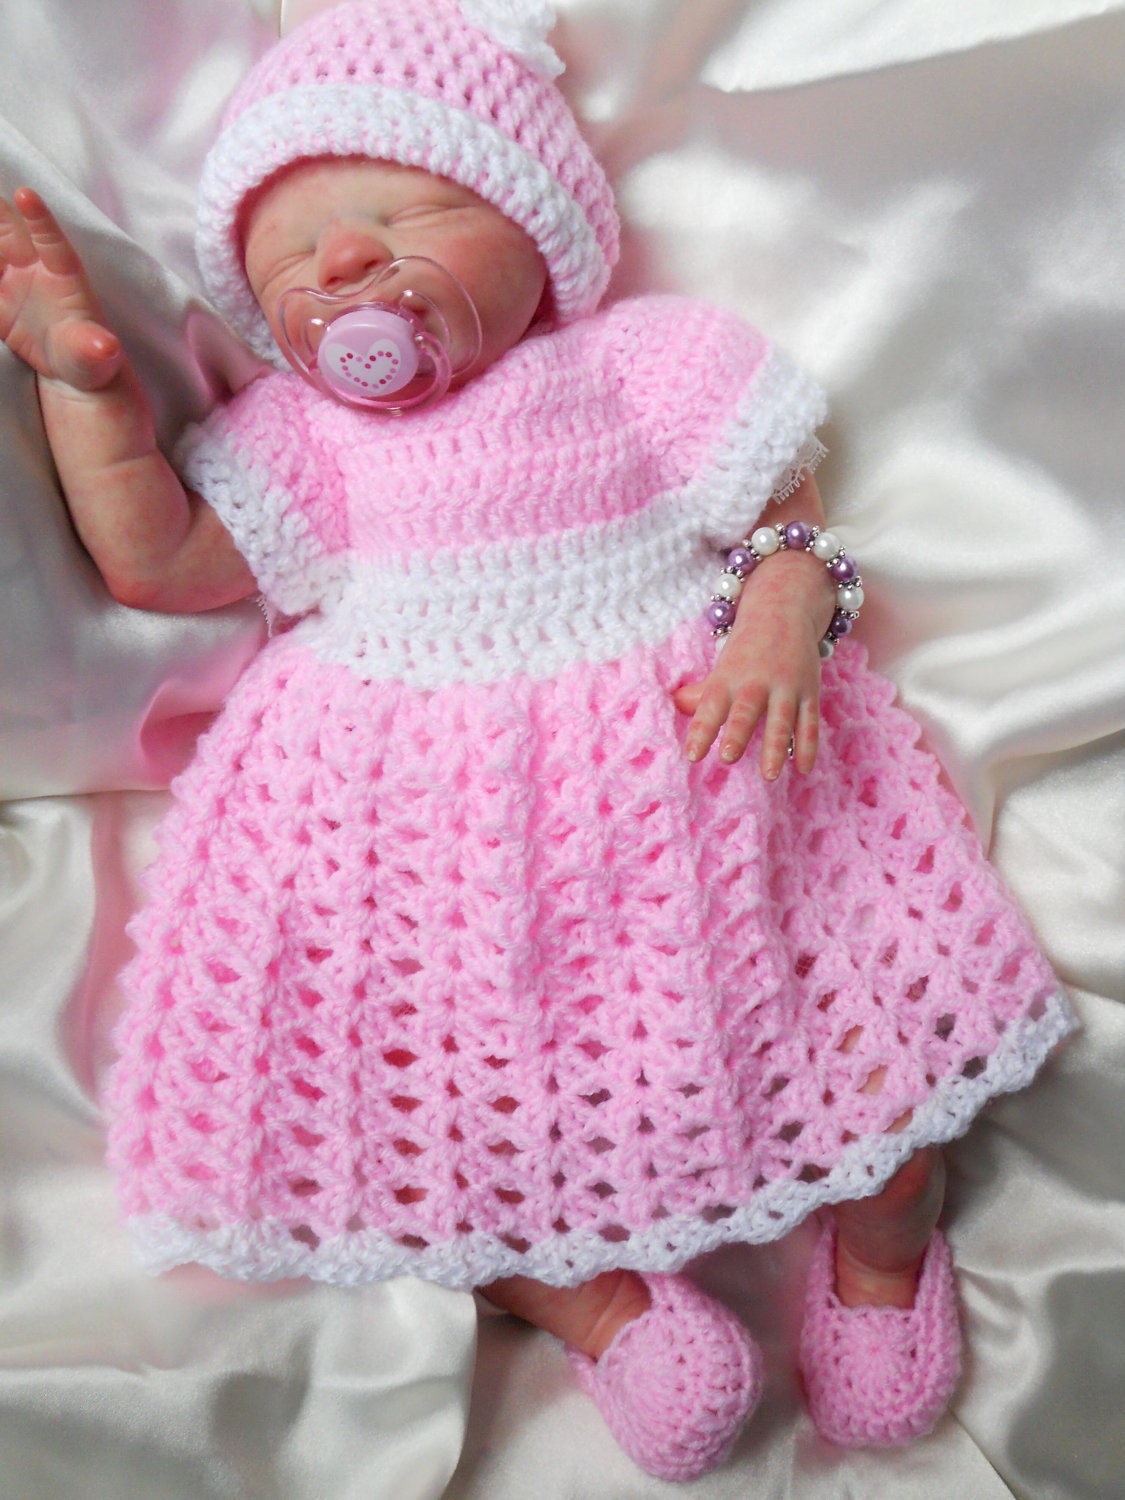 Crochet Baby Set Patterns – Crochet Patterns